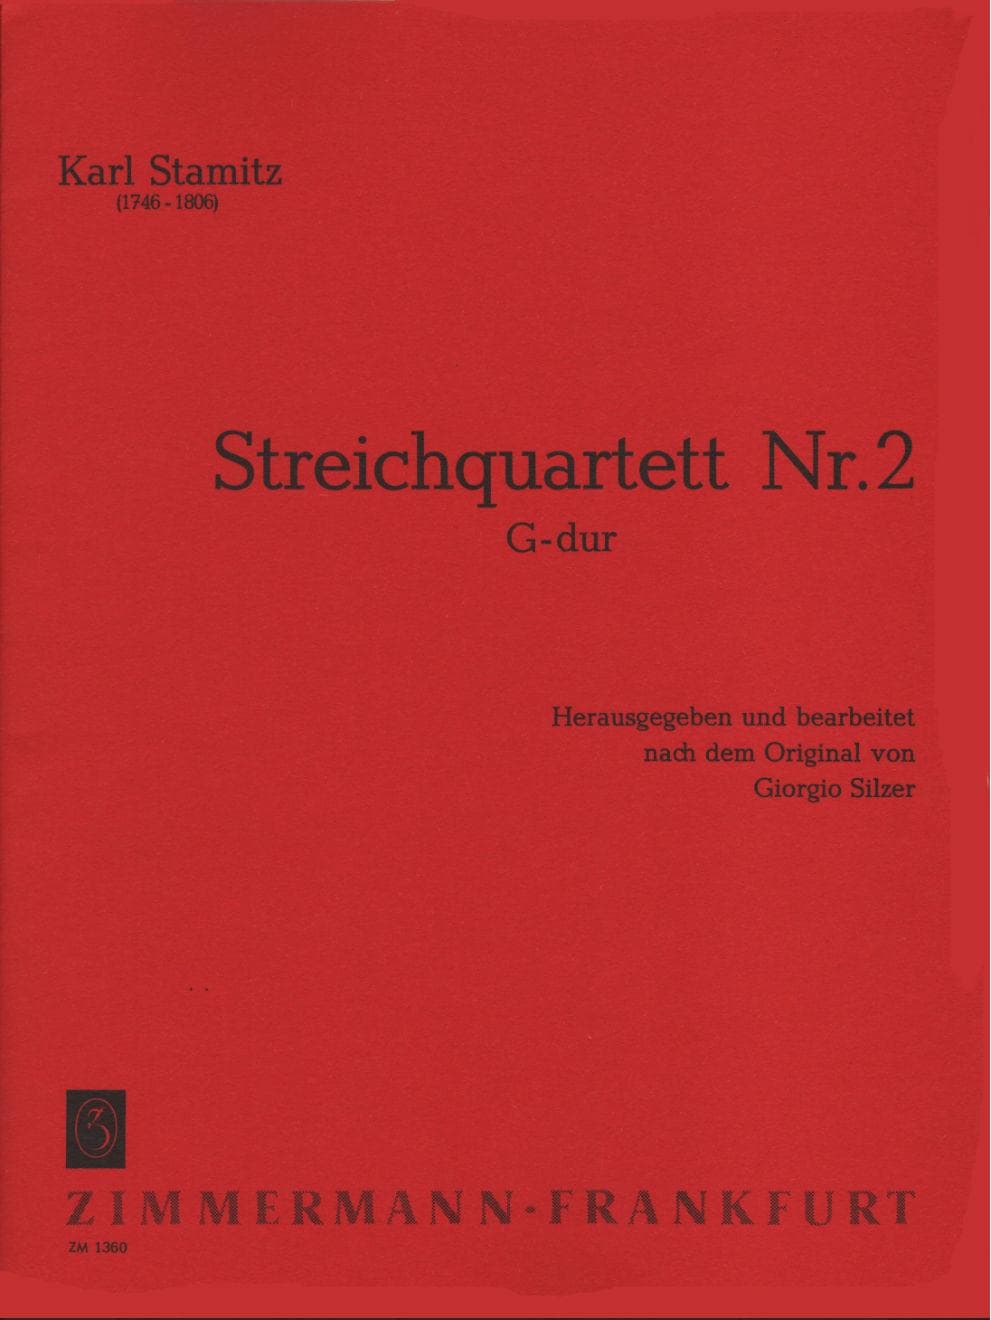 Stamitz - Quartet No 2 In G Major Published by Zimmermann - Frankfurt